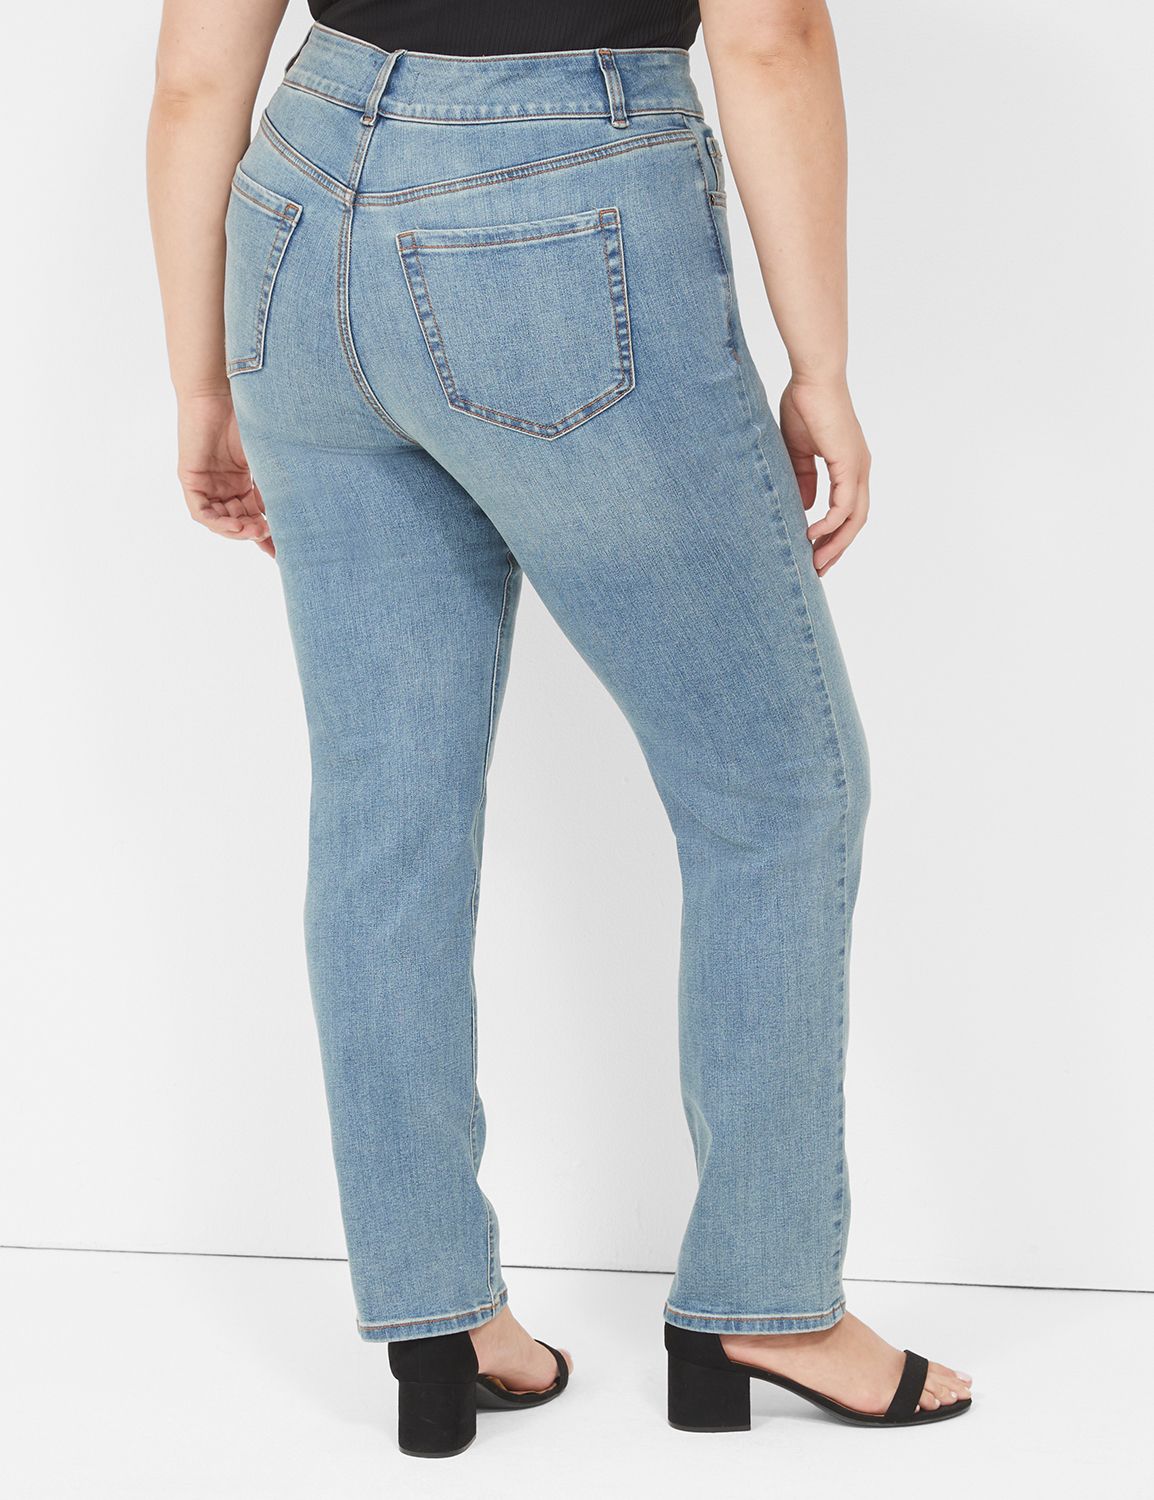 Lane Bryant magic waistband jeans women sz 16 Low rise straight deluxe fit  denim